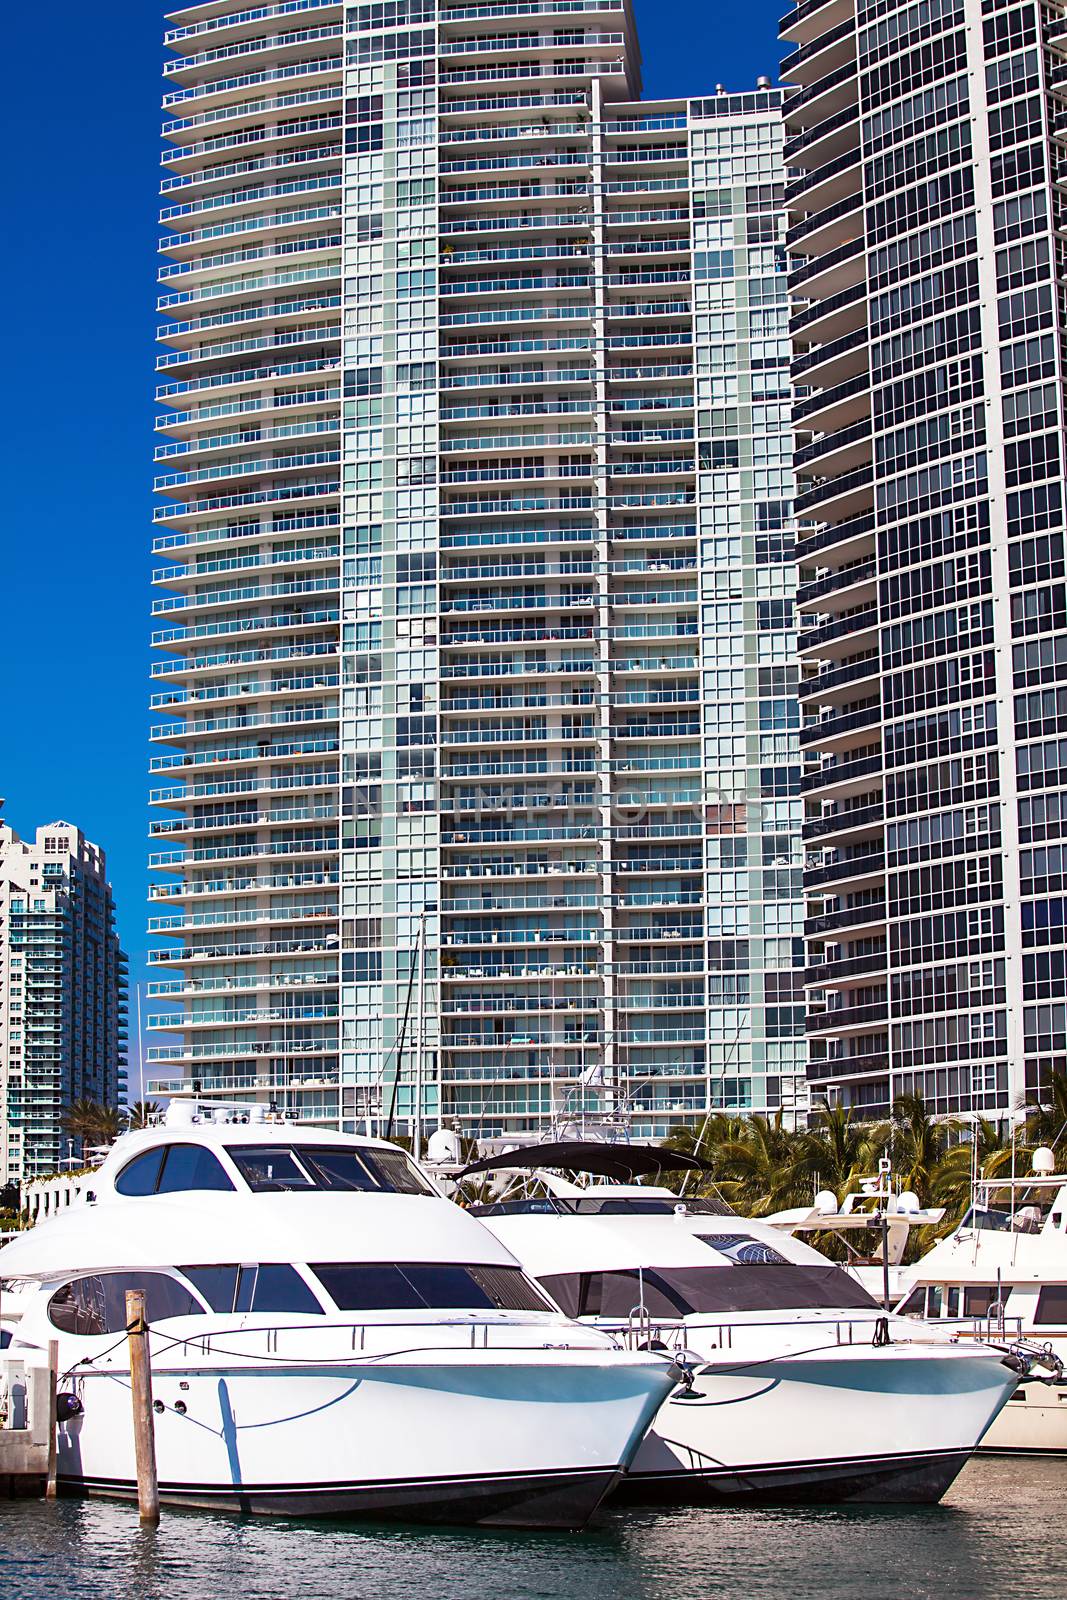 Marina in Miami Florida in front of skyscrapers